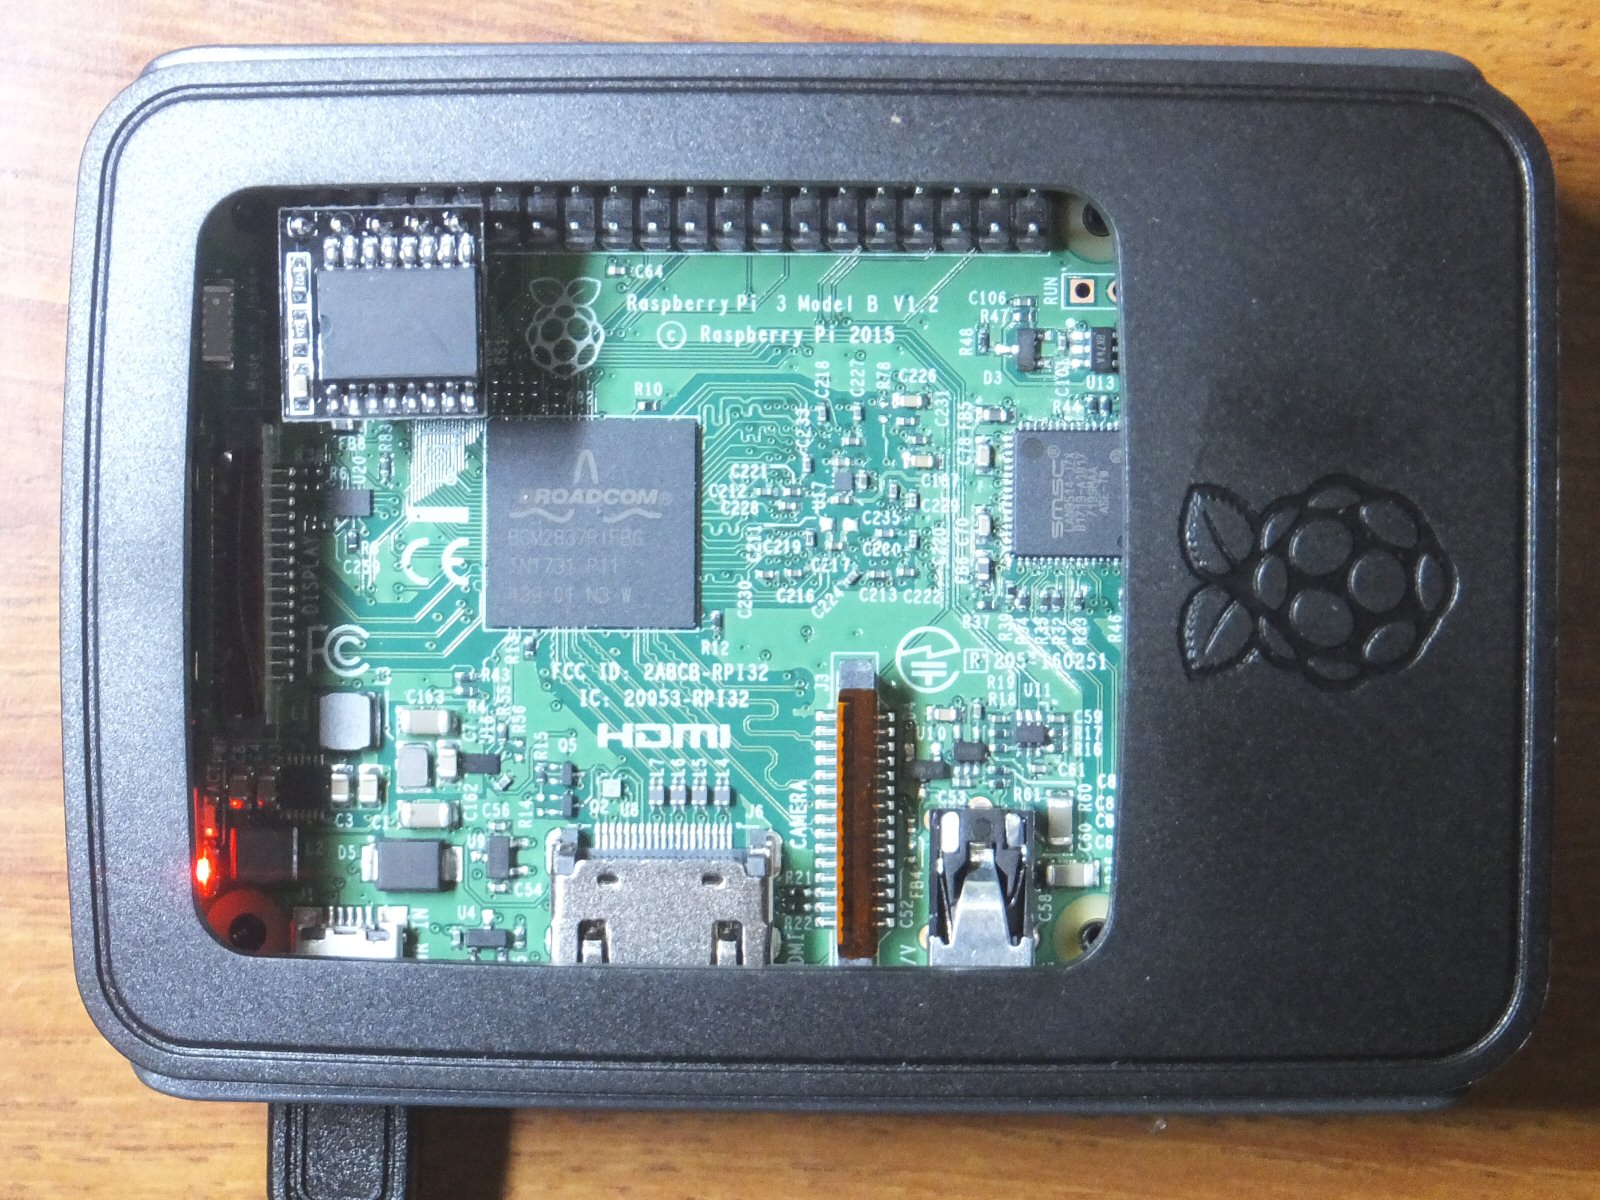 Raspberry Pi 3 Model B V1.2（SD16GB付）